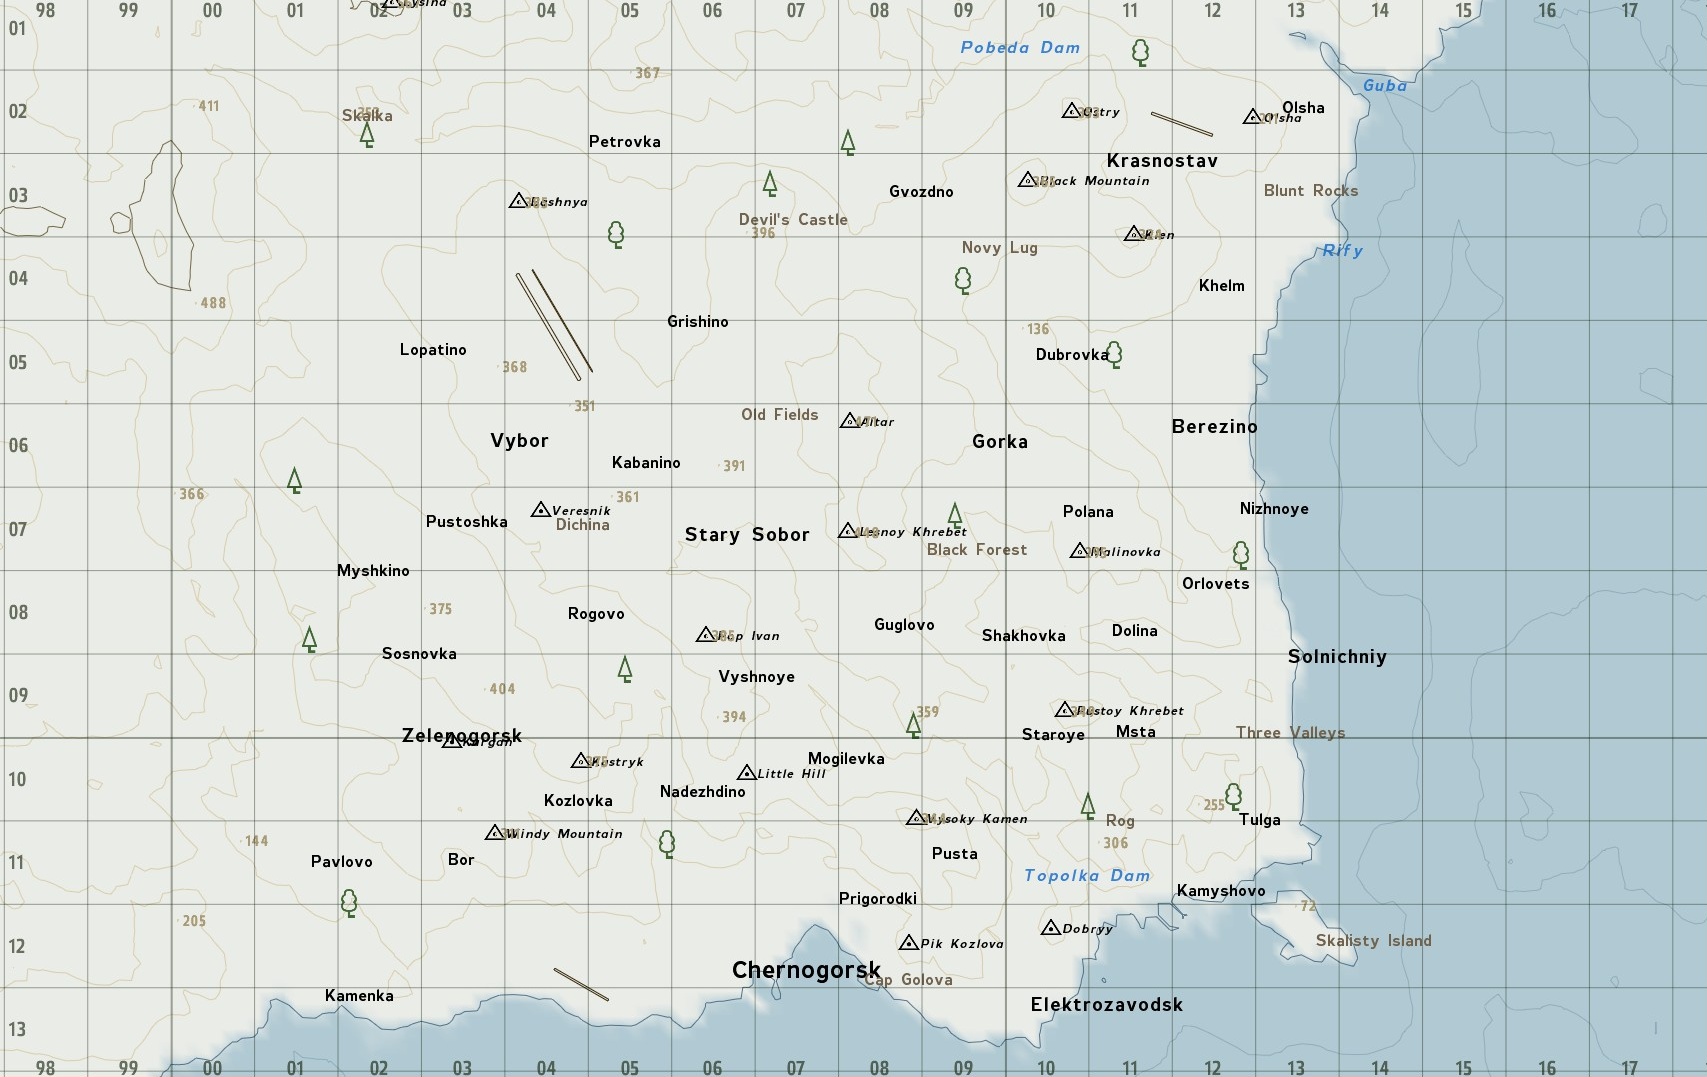 Карта dayz на русском. Военные базы DAYZ 1.10. Карта DAYZ военные базы. Карта Дейзи с военными базами. Арма 2 Дейзи карта.